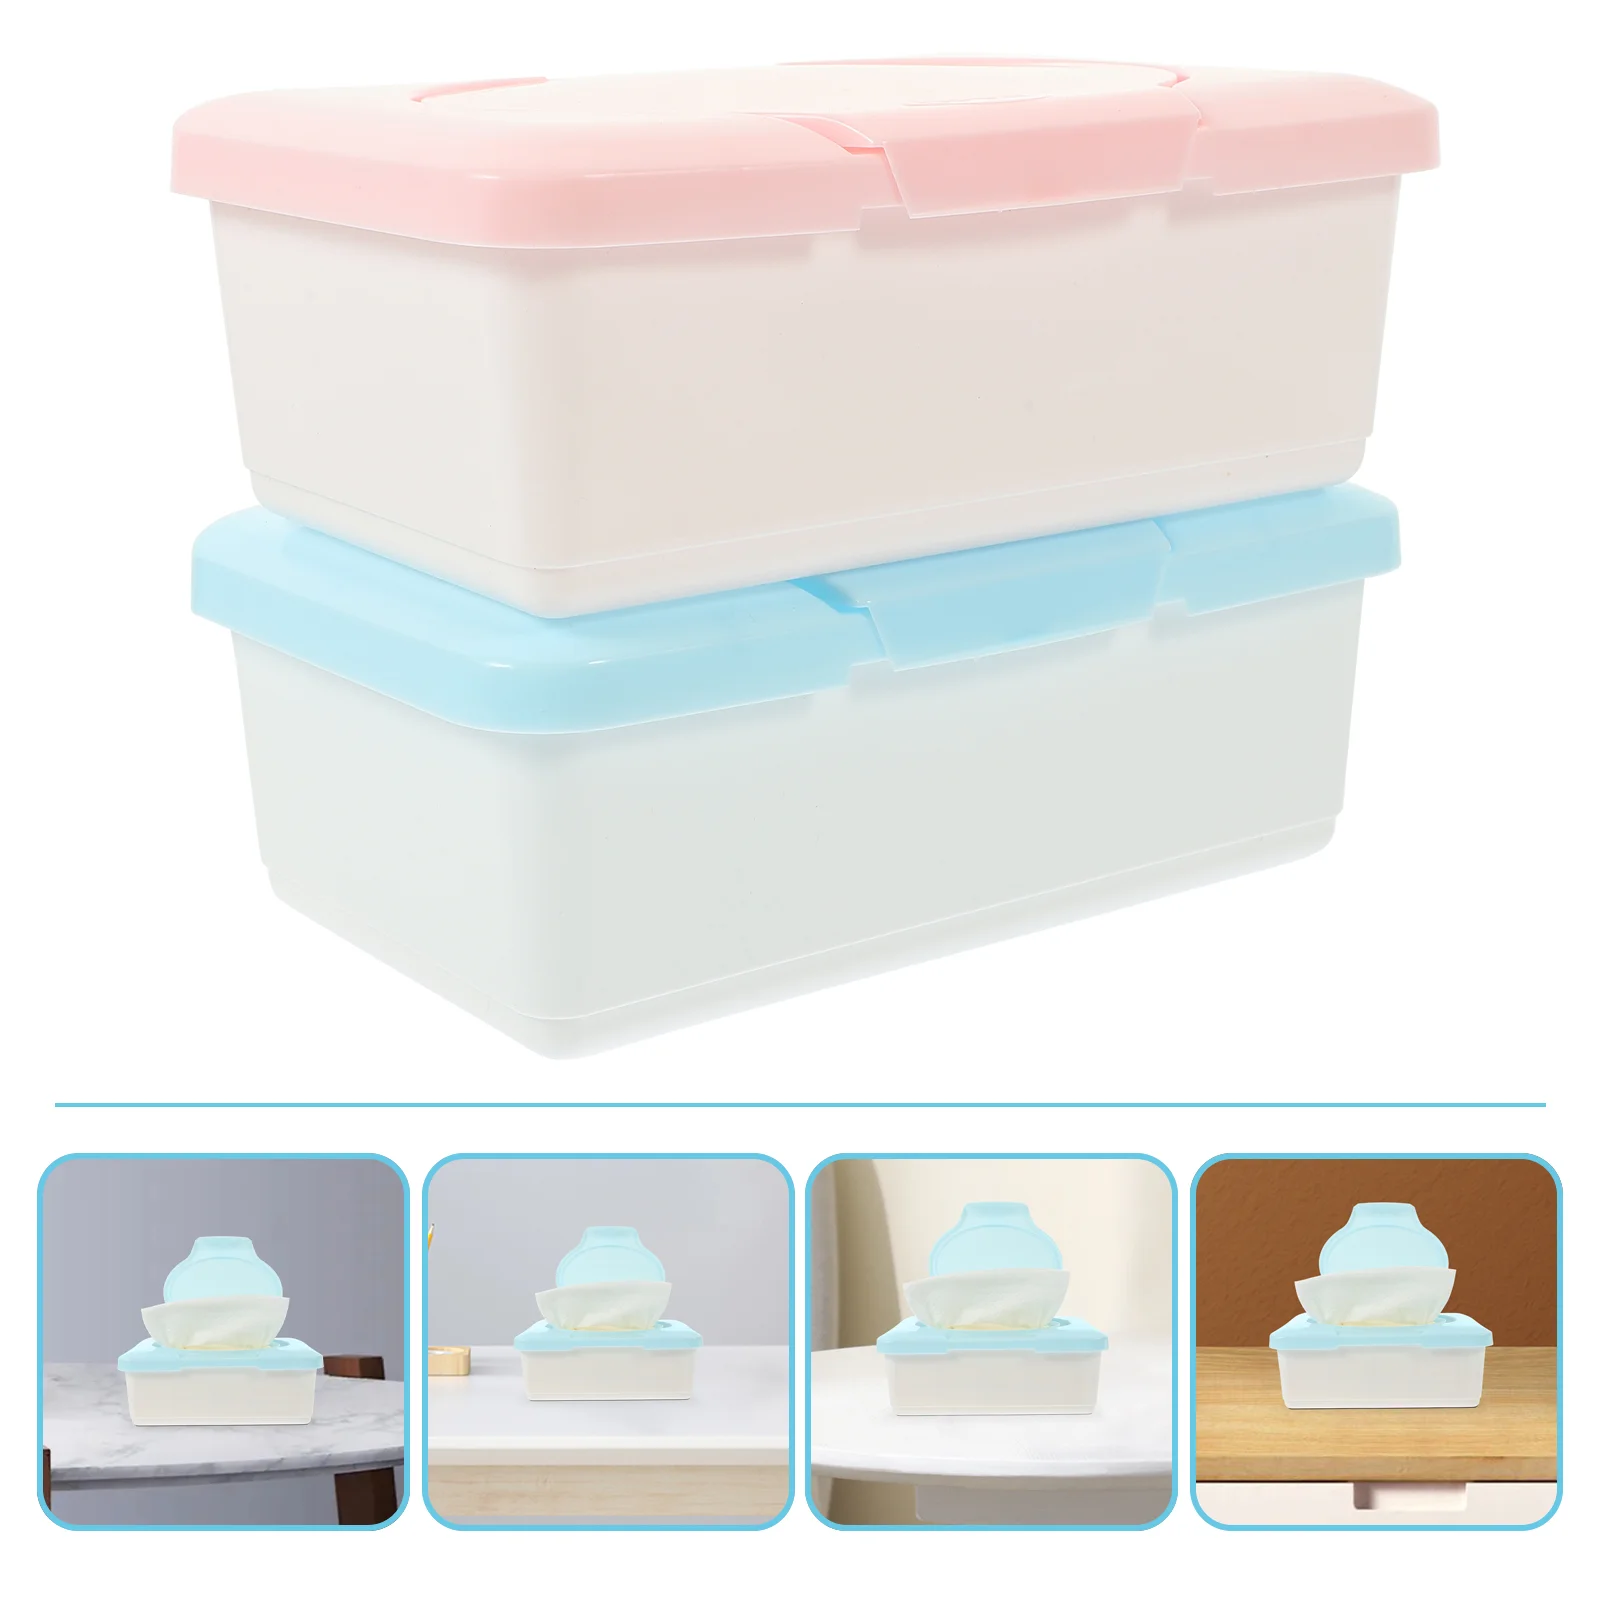 

Fomiyes коробка для салфеток Babywipe, салфетки для путешествий, держатель для салфеток, многоразовые детские салфетки, салфетки для ванной комнаты